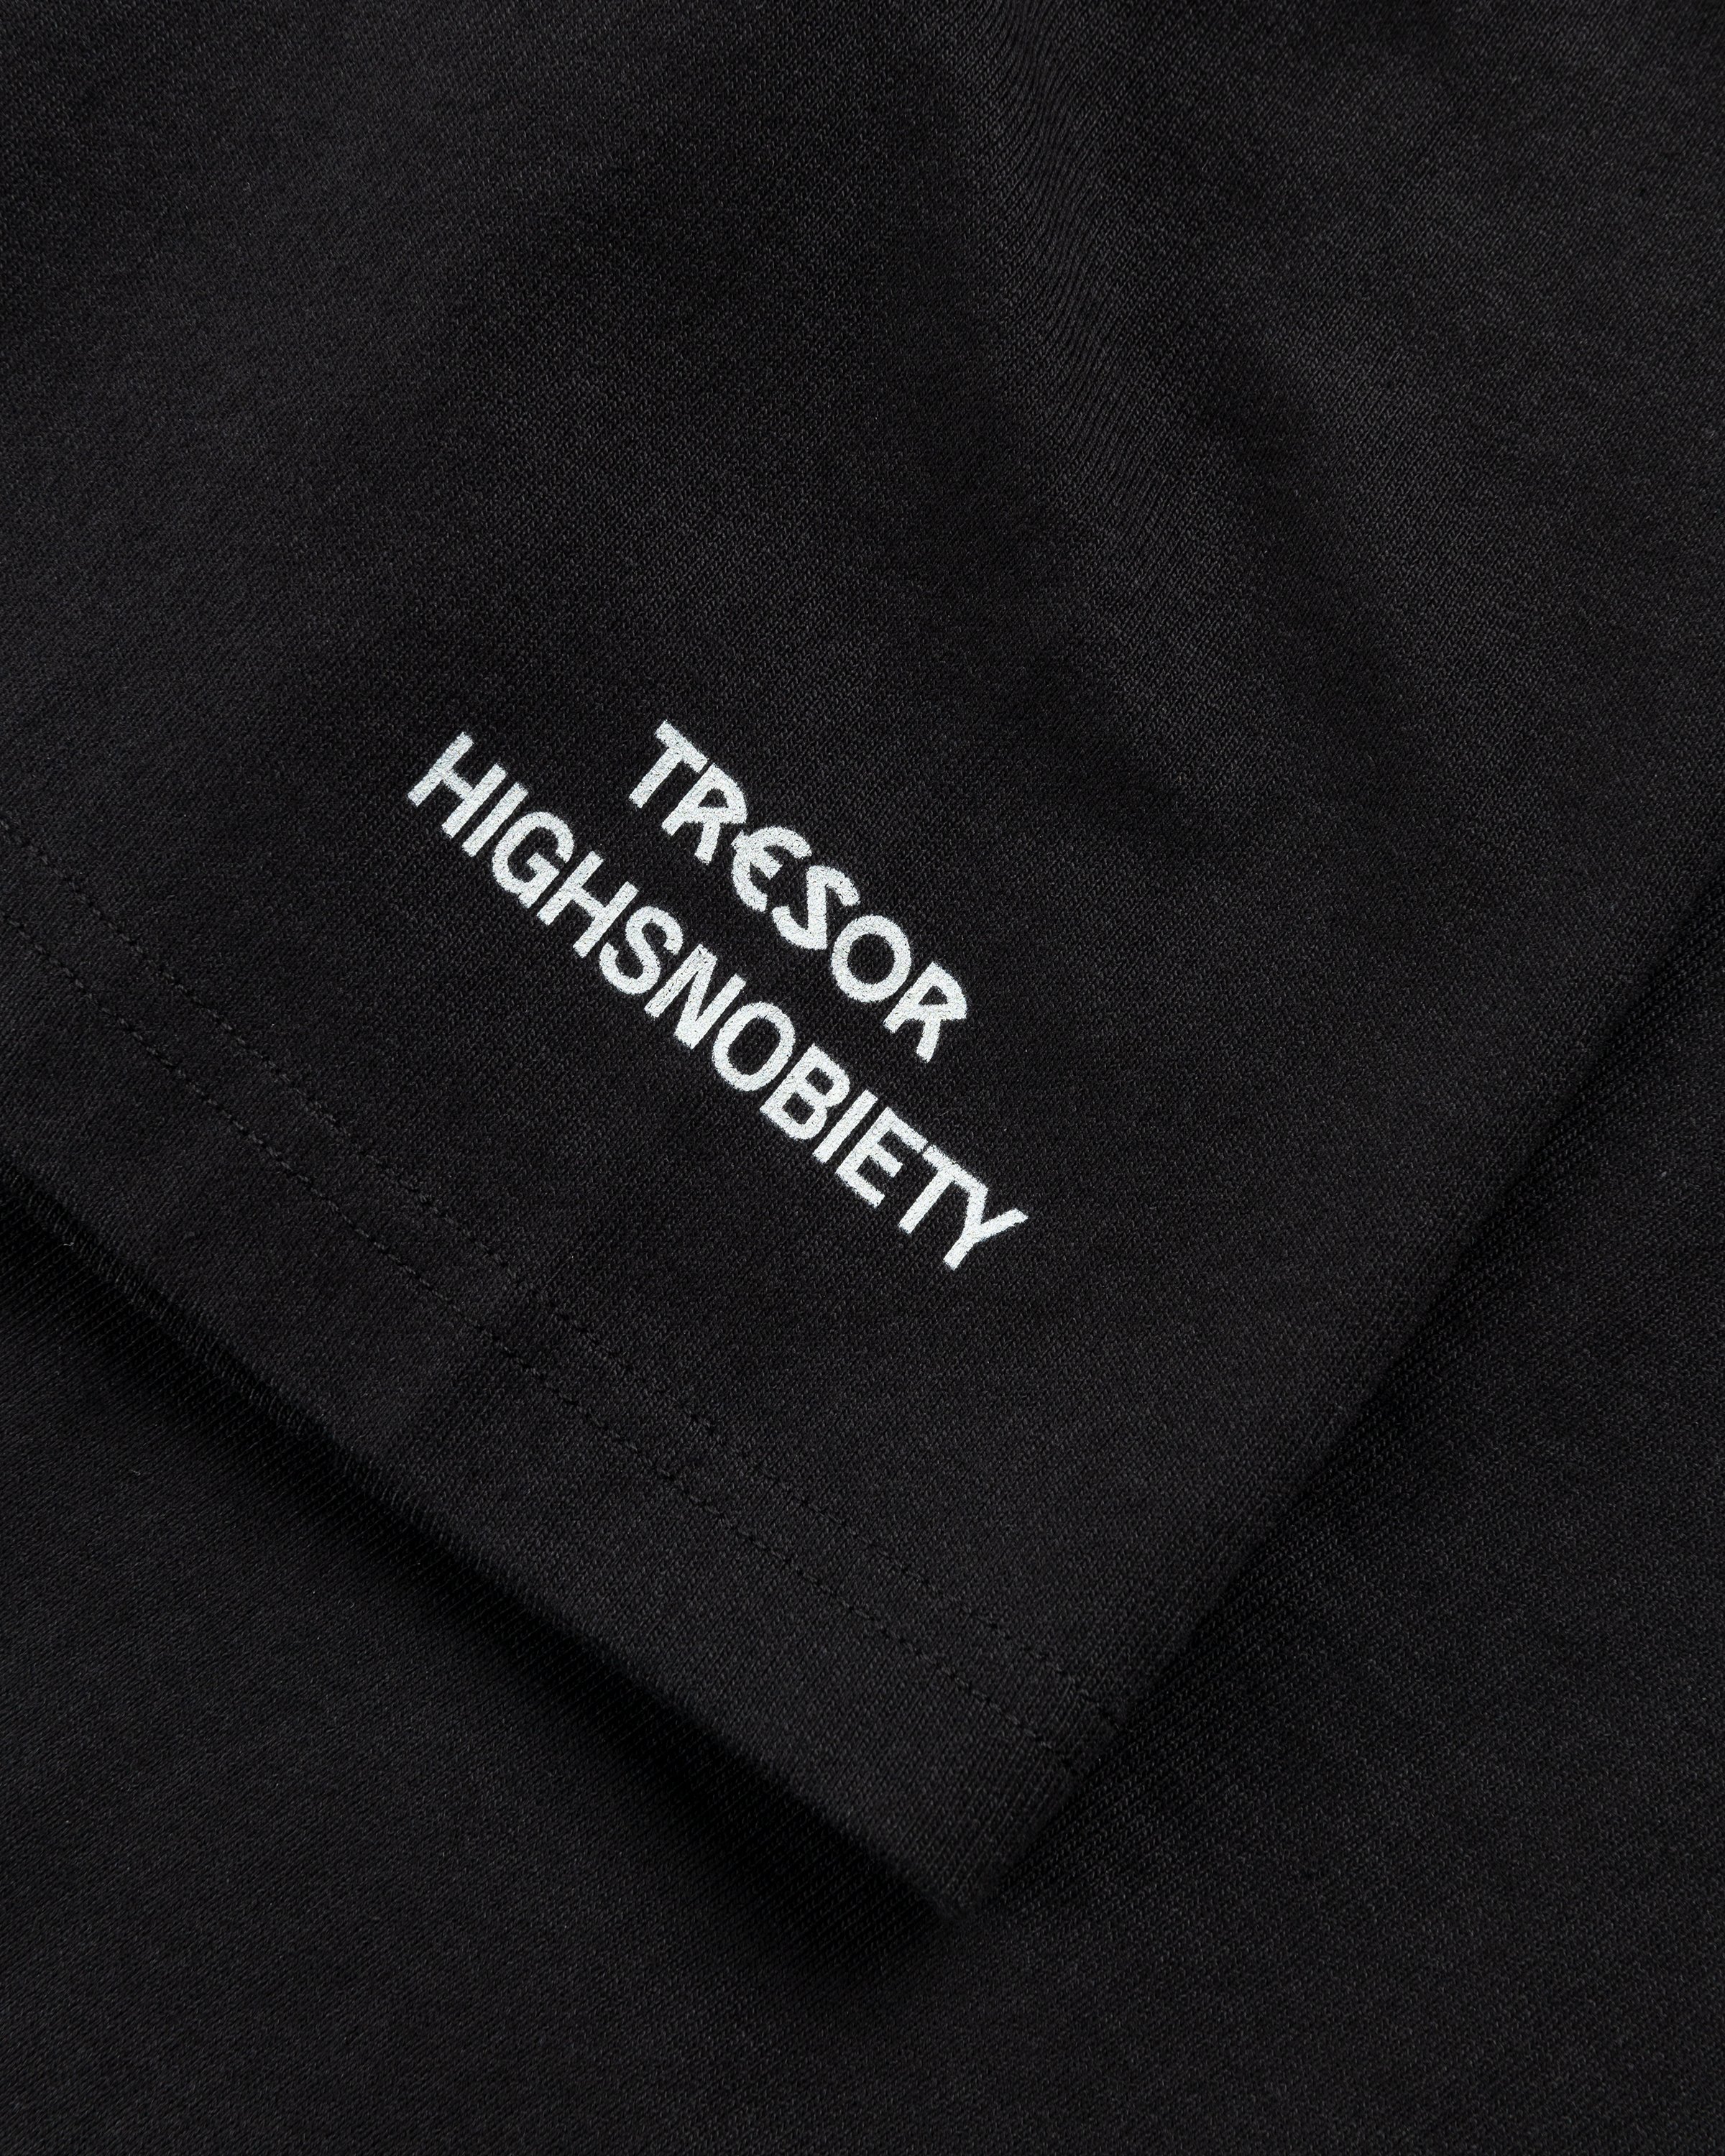 Tresor x Highsnobiety - BERLIN, BERLIN 3 Detroit Berlin T-Shirt Black - Clothing - Black - Image 5